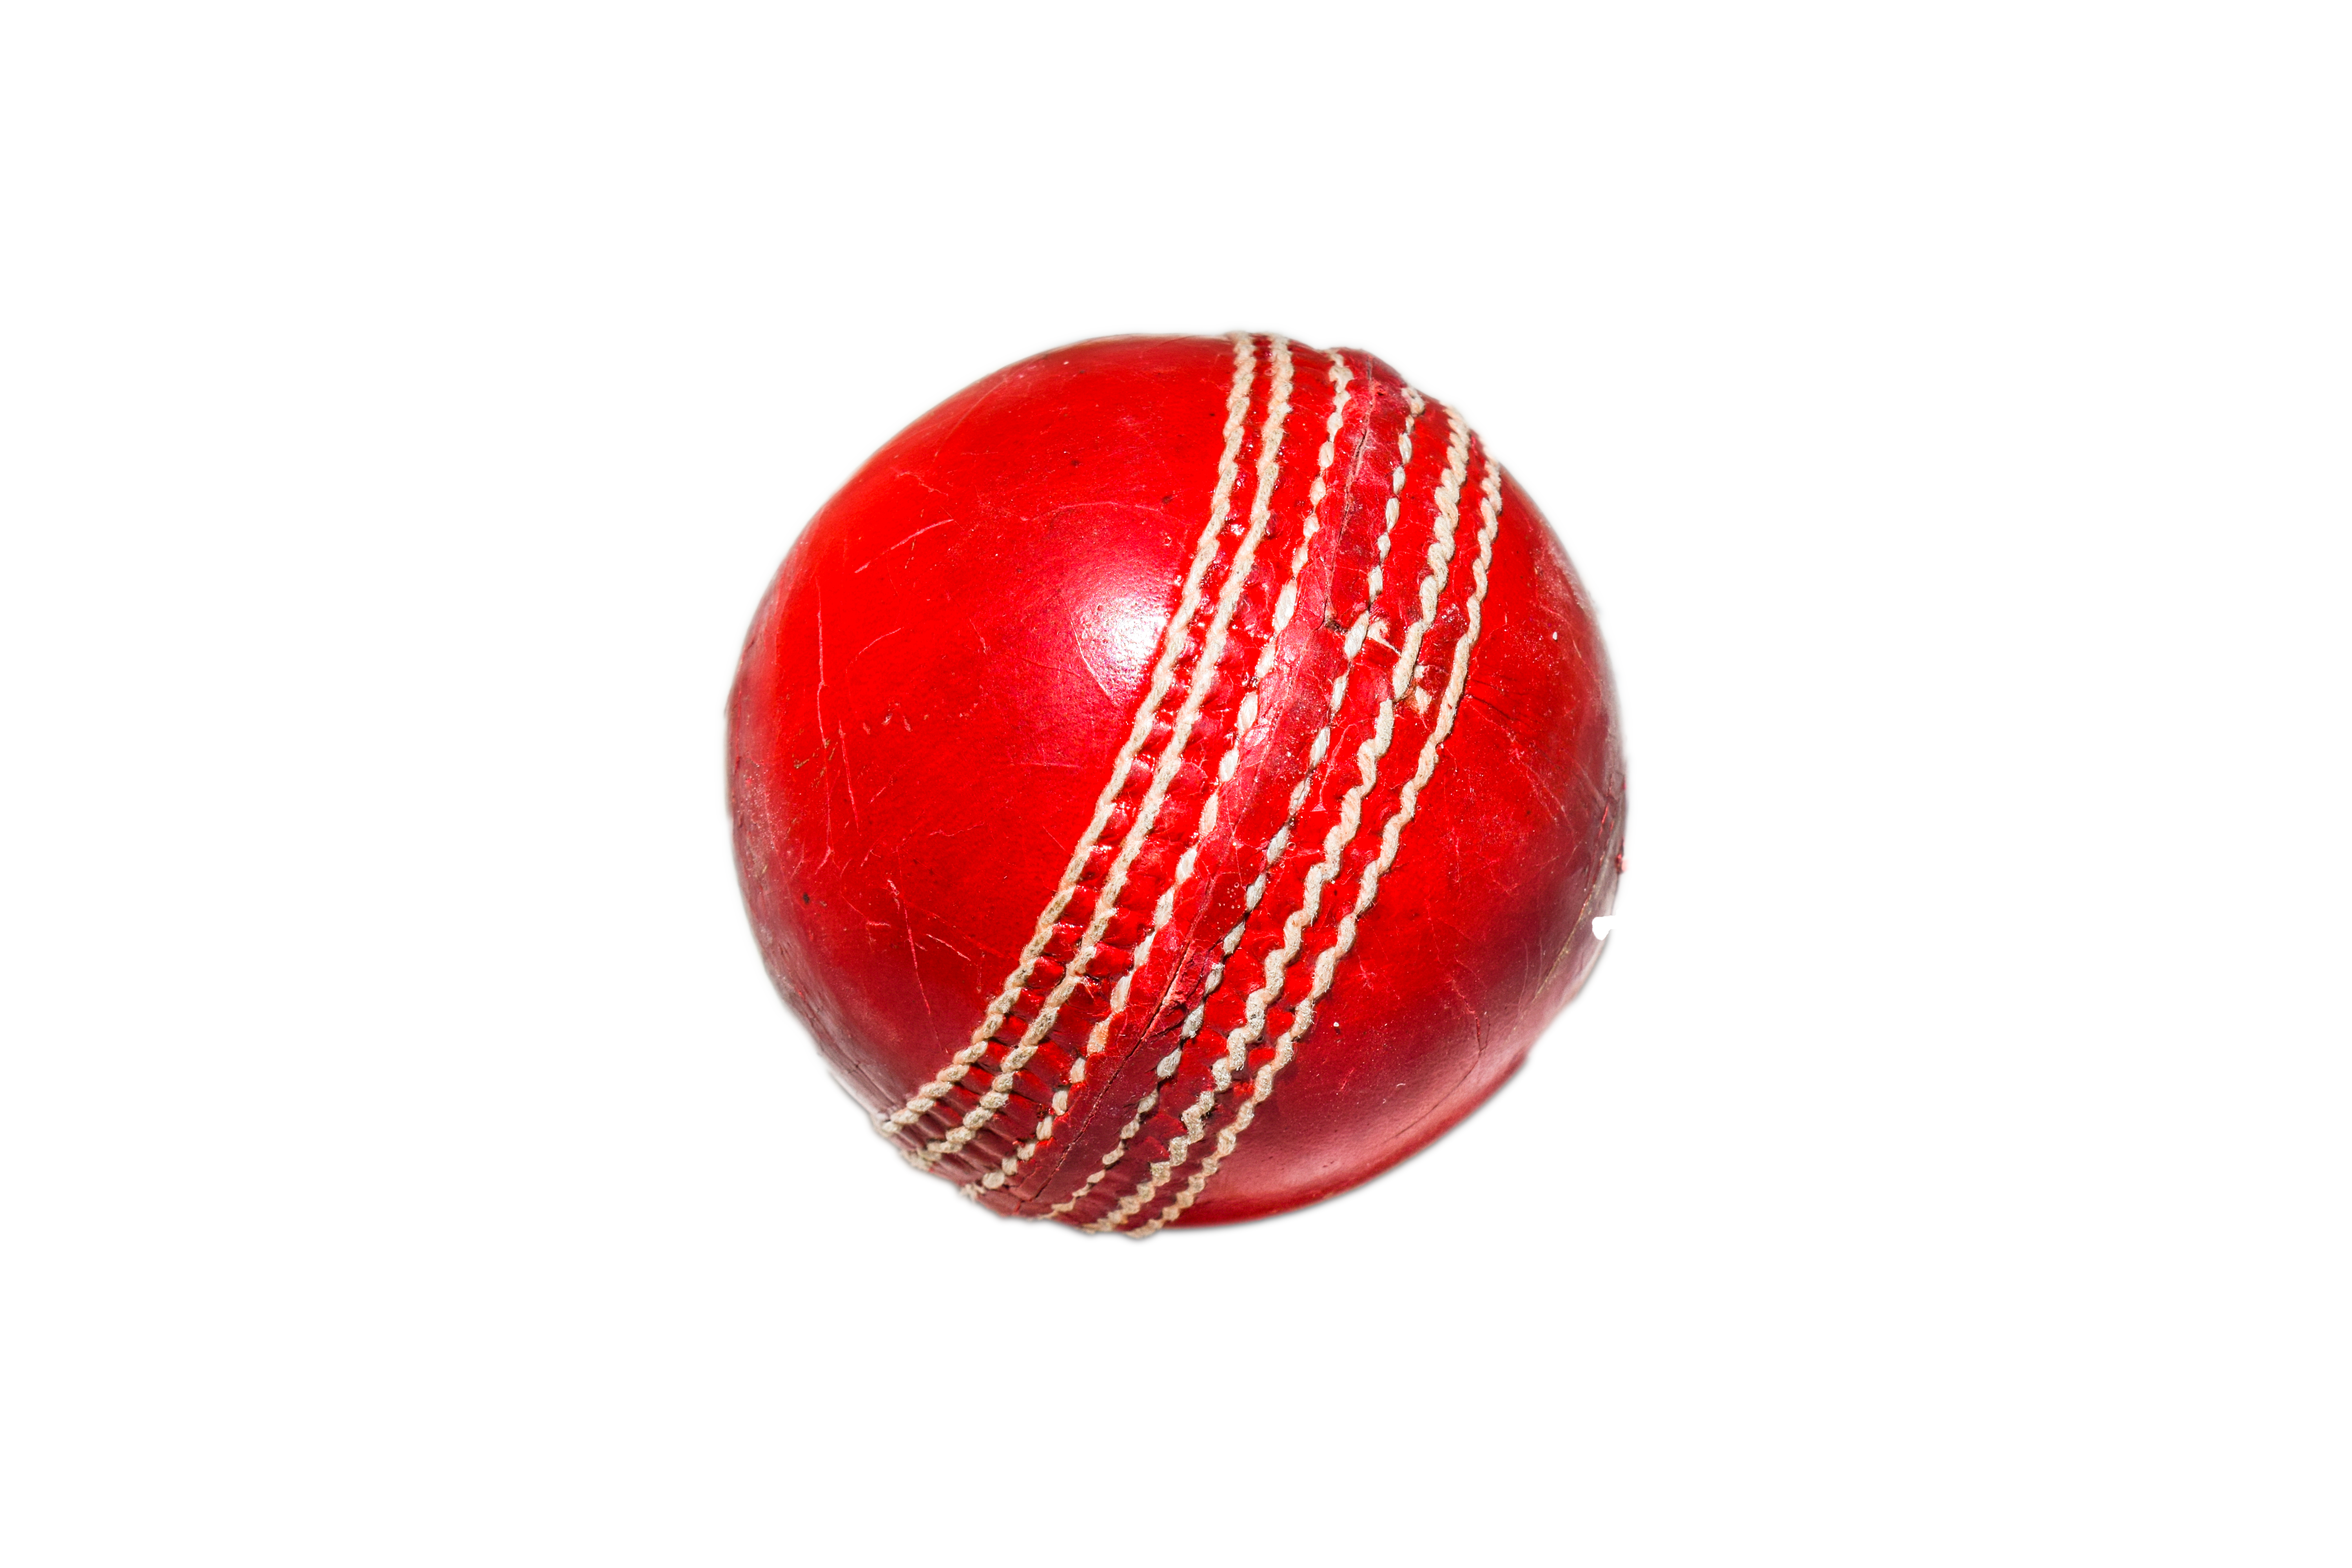 cricket clipart cricket game